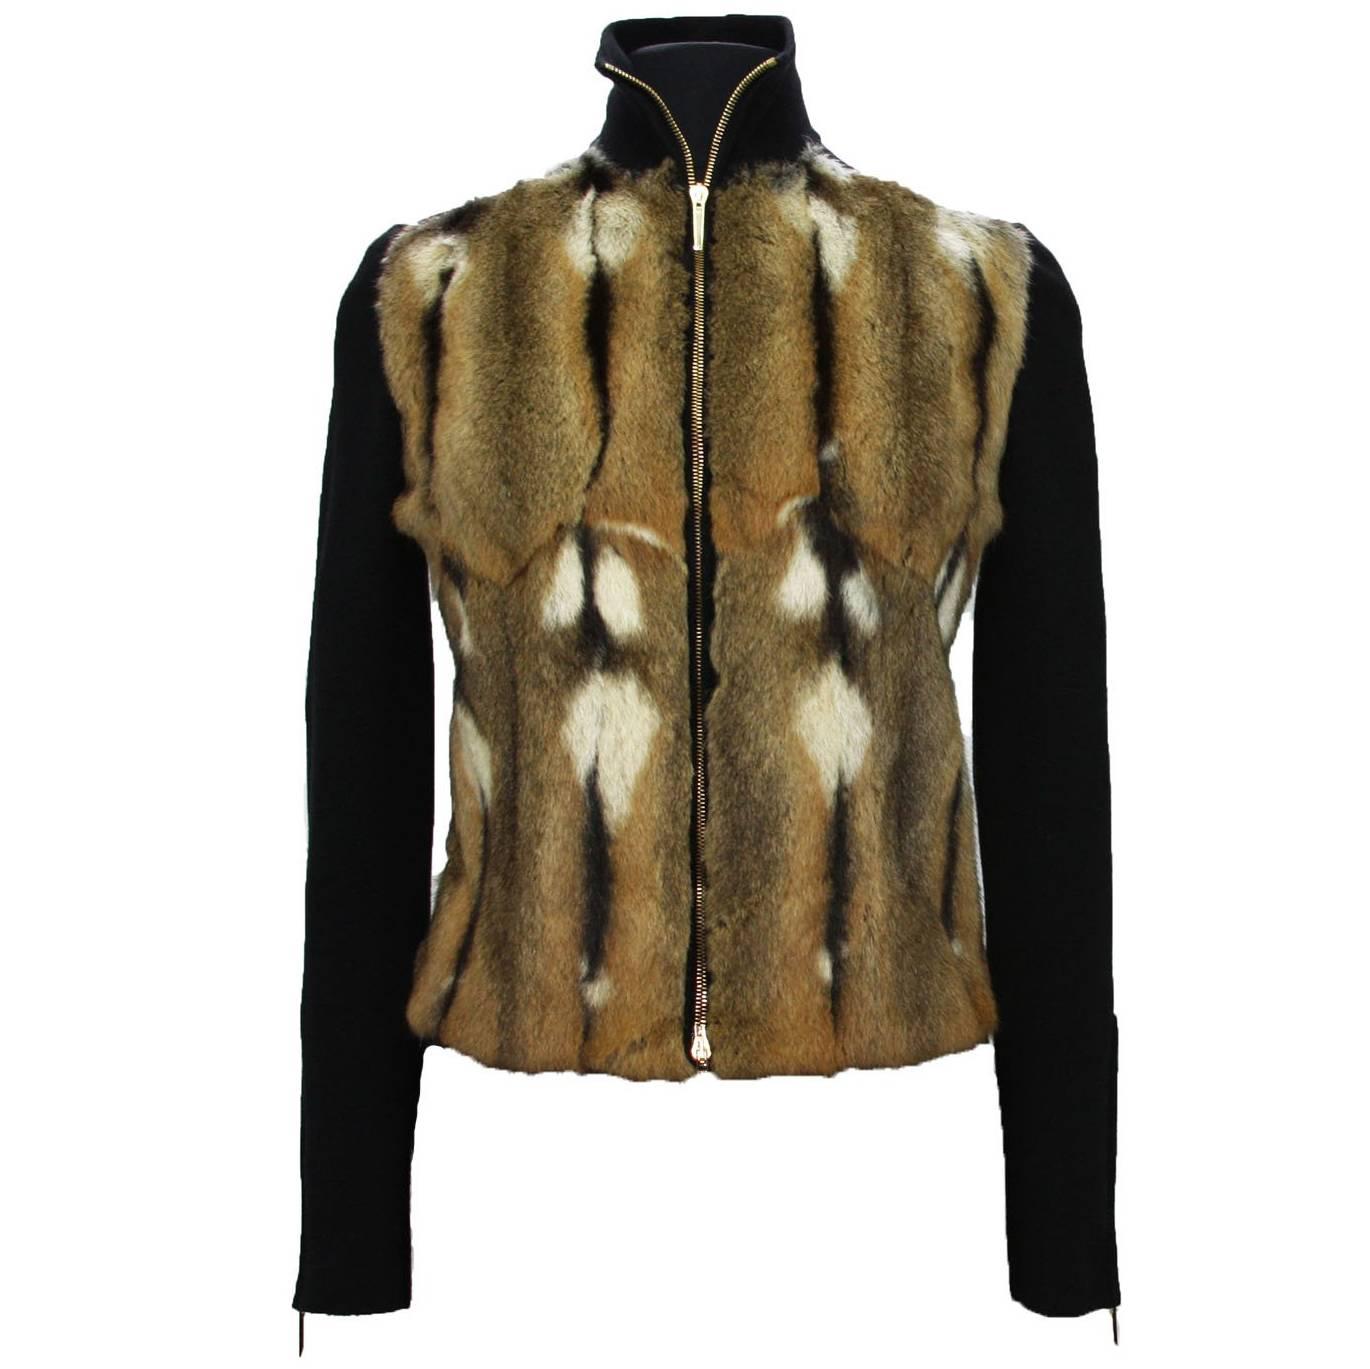 New TOM FORD for GUCCI F/W 2000 Fur Wool Silk Cashmere Cardigan Sweater Jacket S